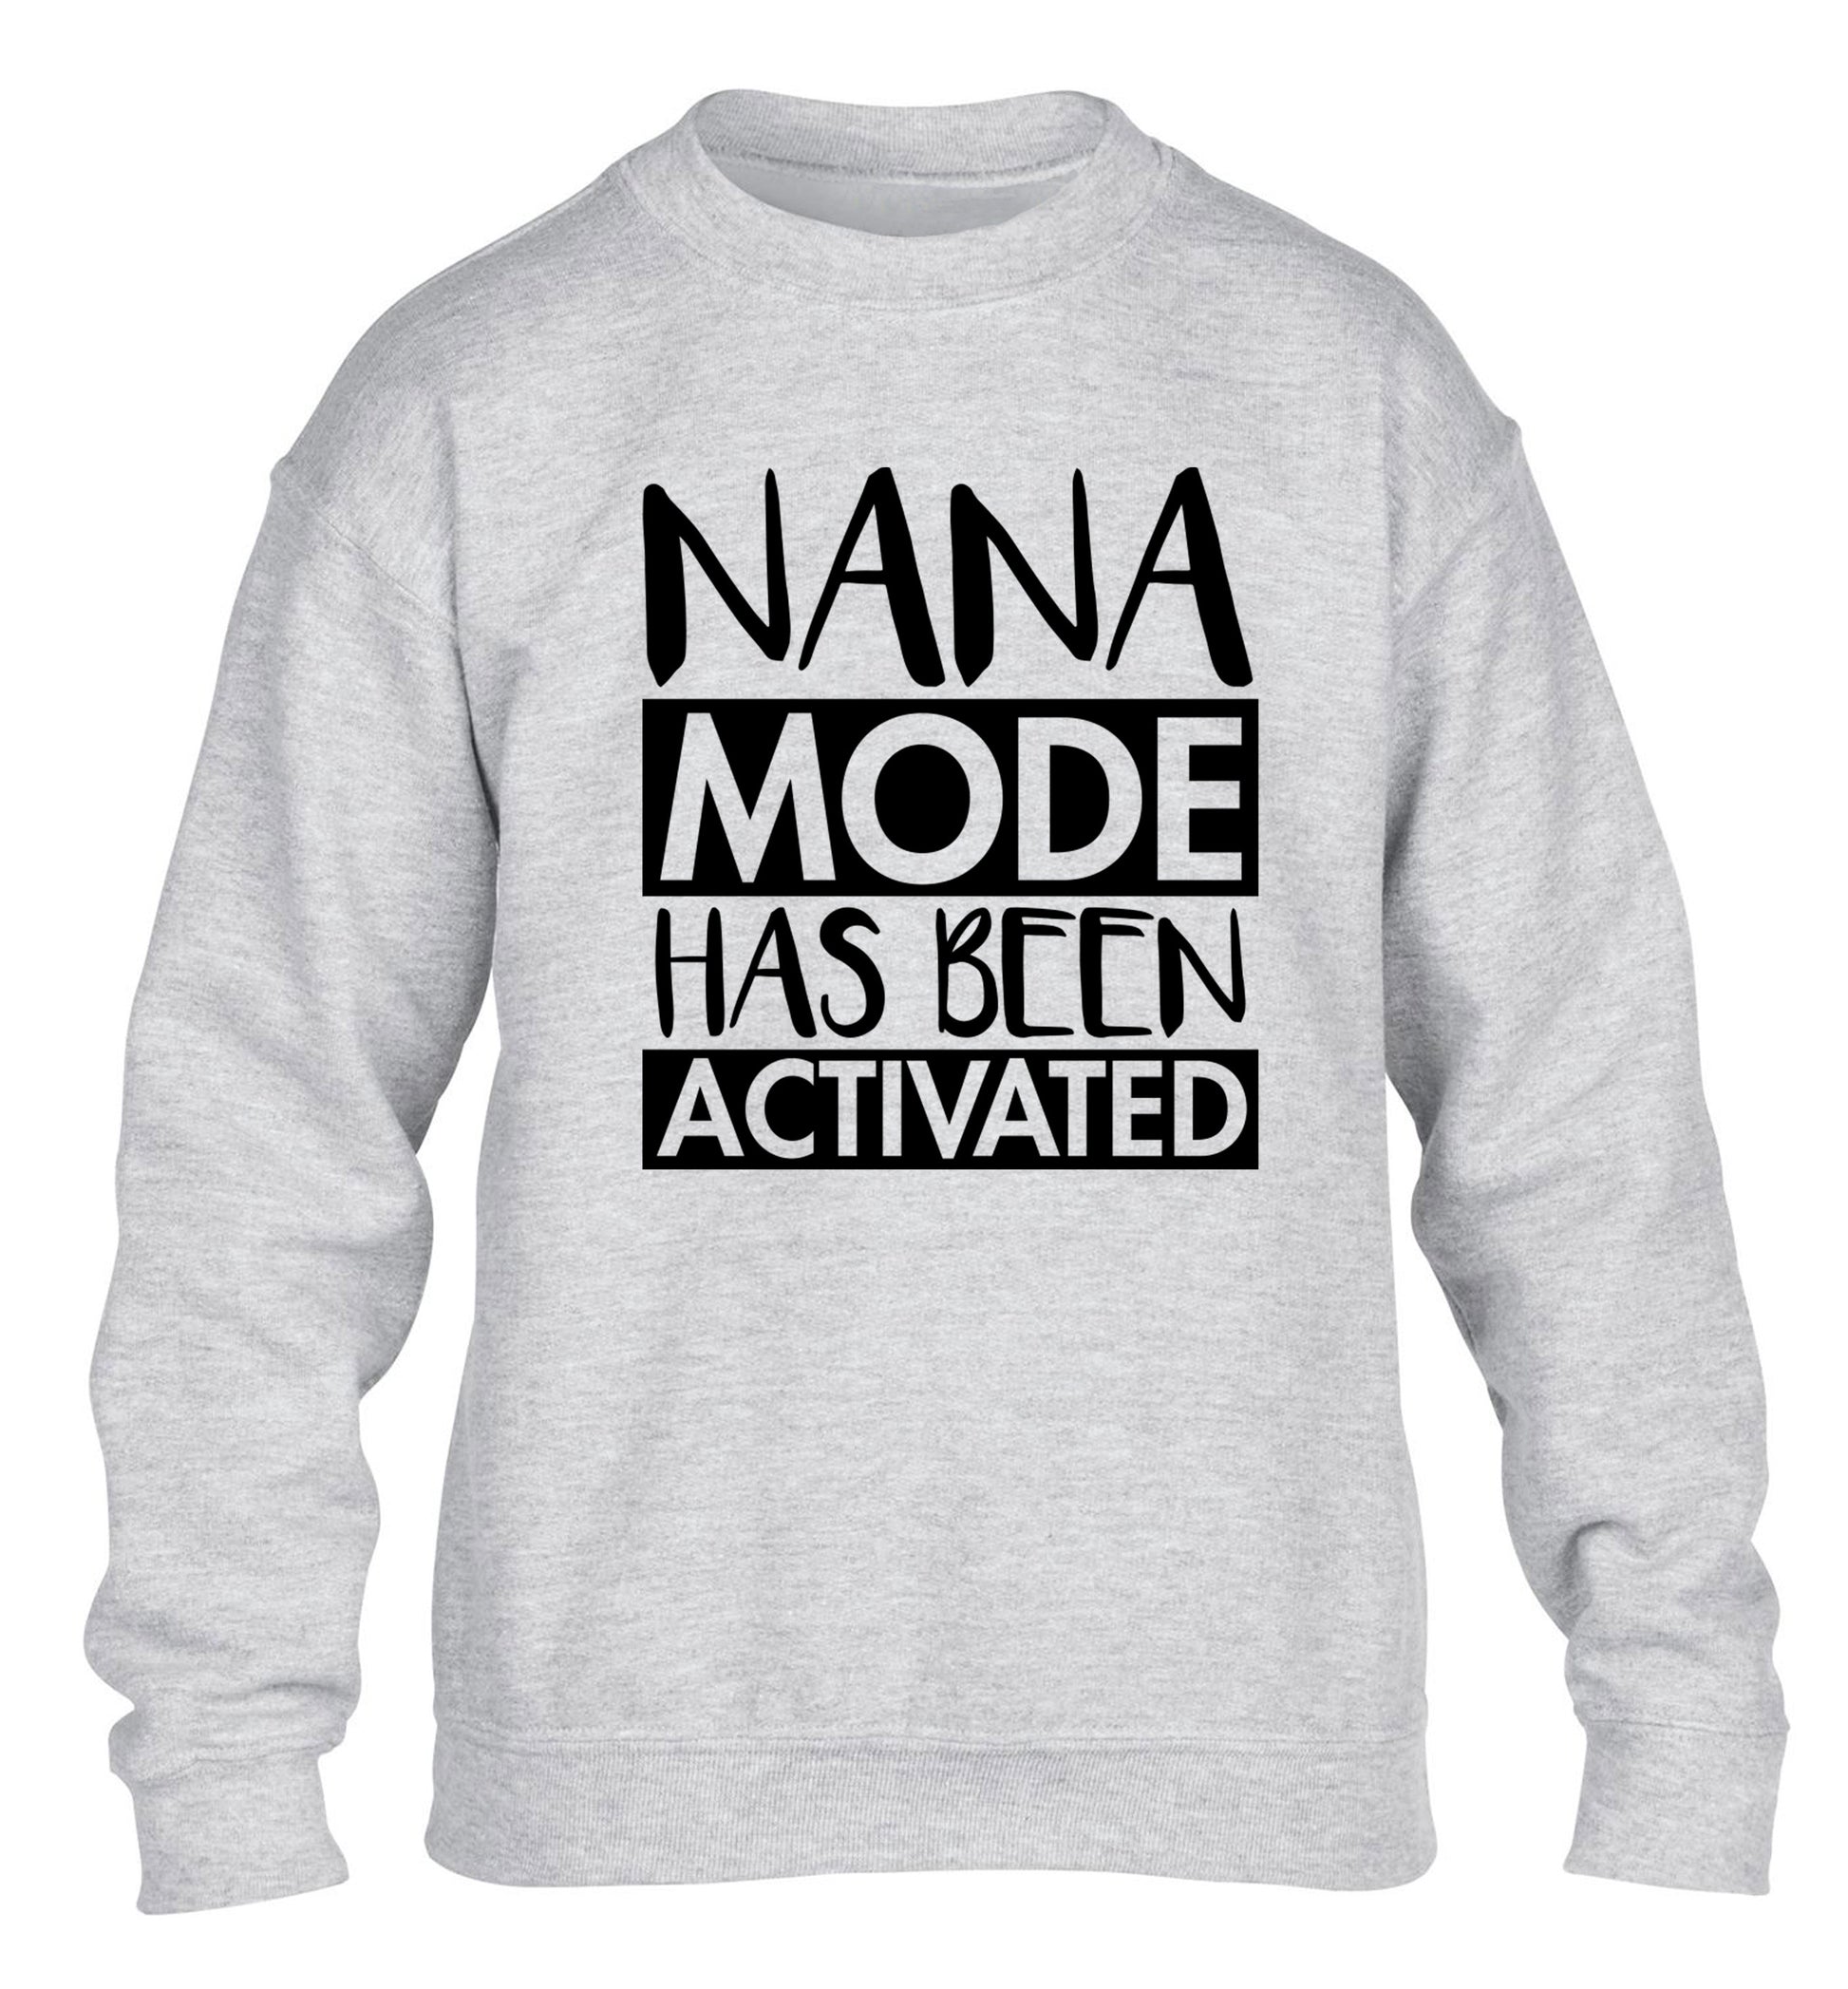 Nana mode activated children's grey sweater 12-14 Years